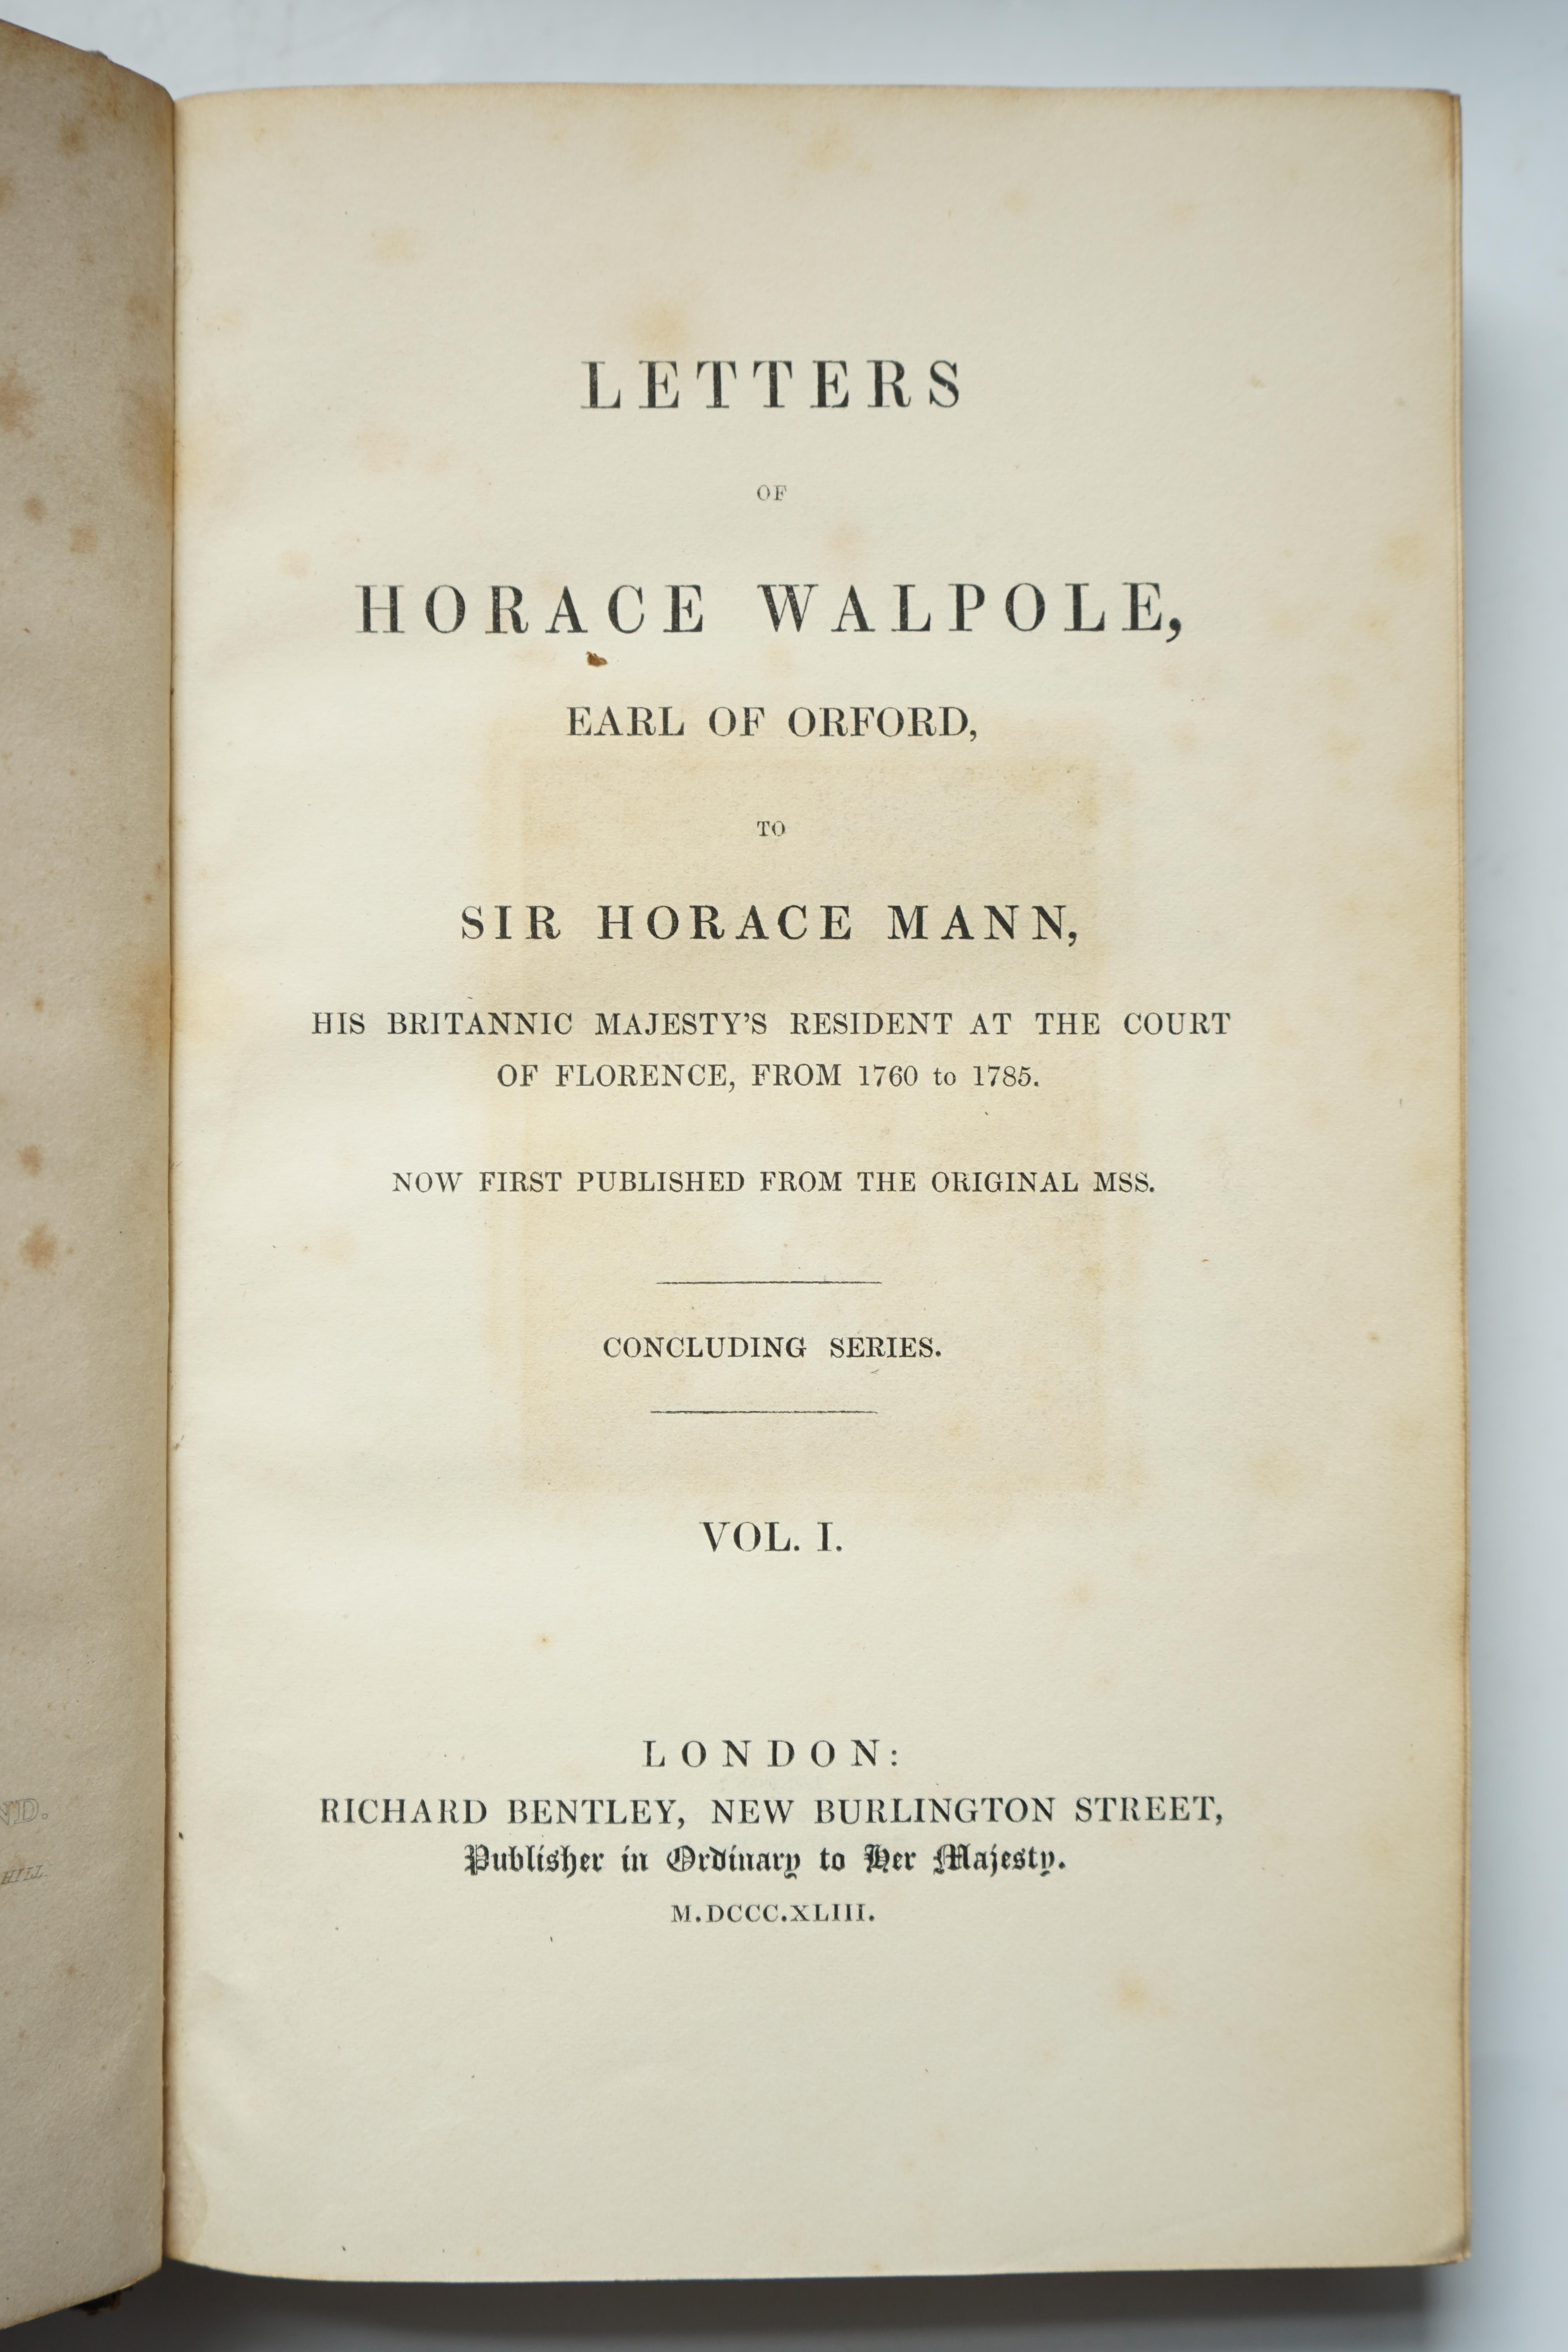 Walpole, Horace - Letters of Horace Walpole, Earl of Orford to Horace Mann, 4 vols, 8vo, half calf, Richard Bentley, London, 1843-44